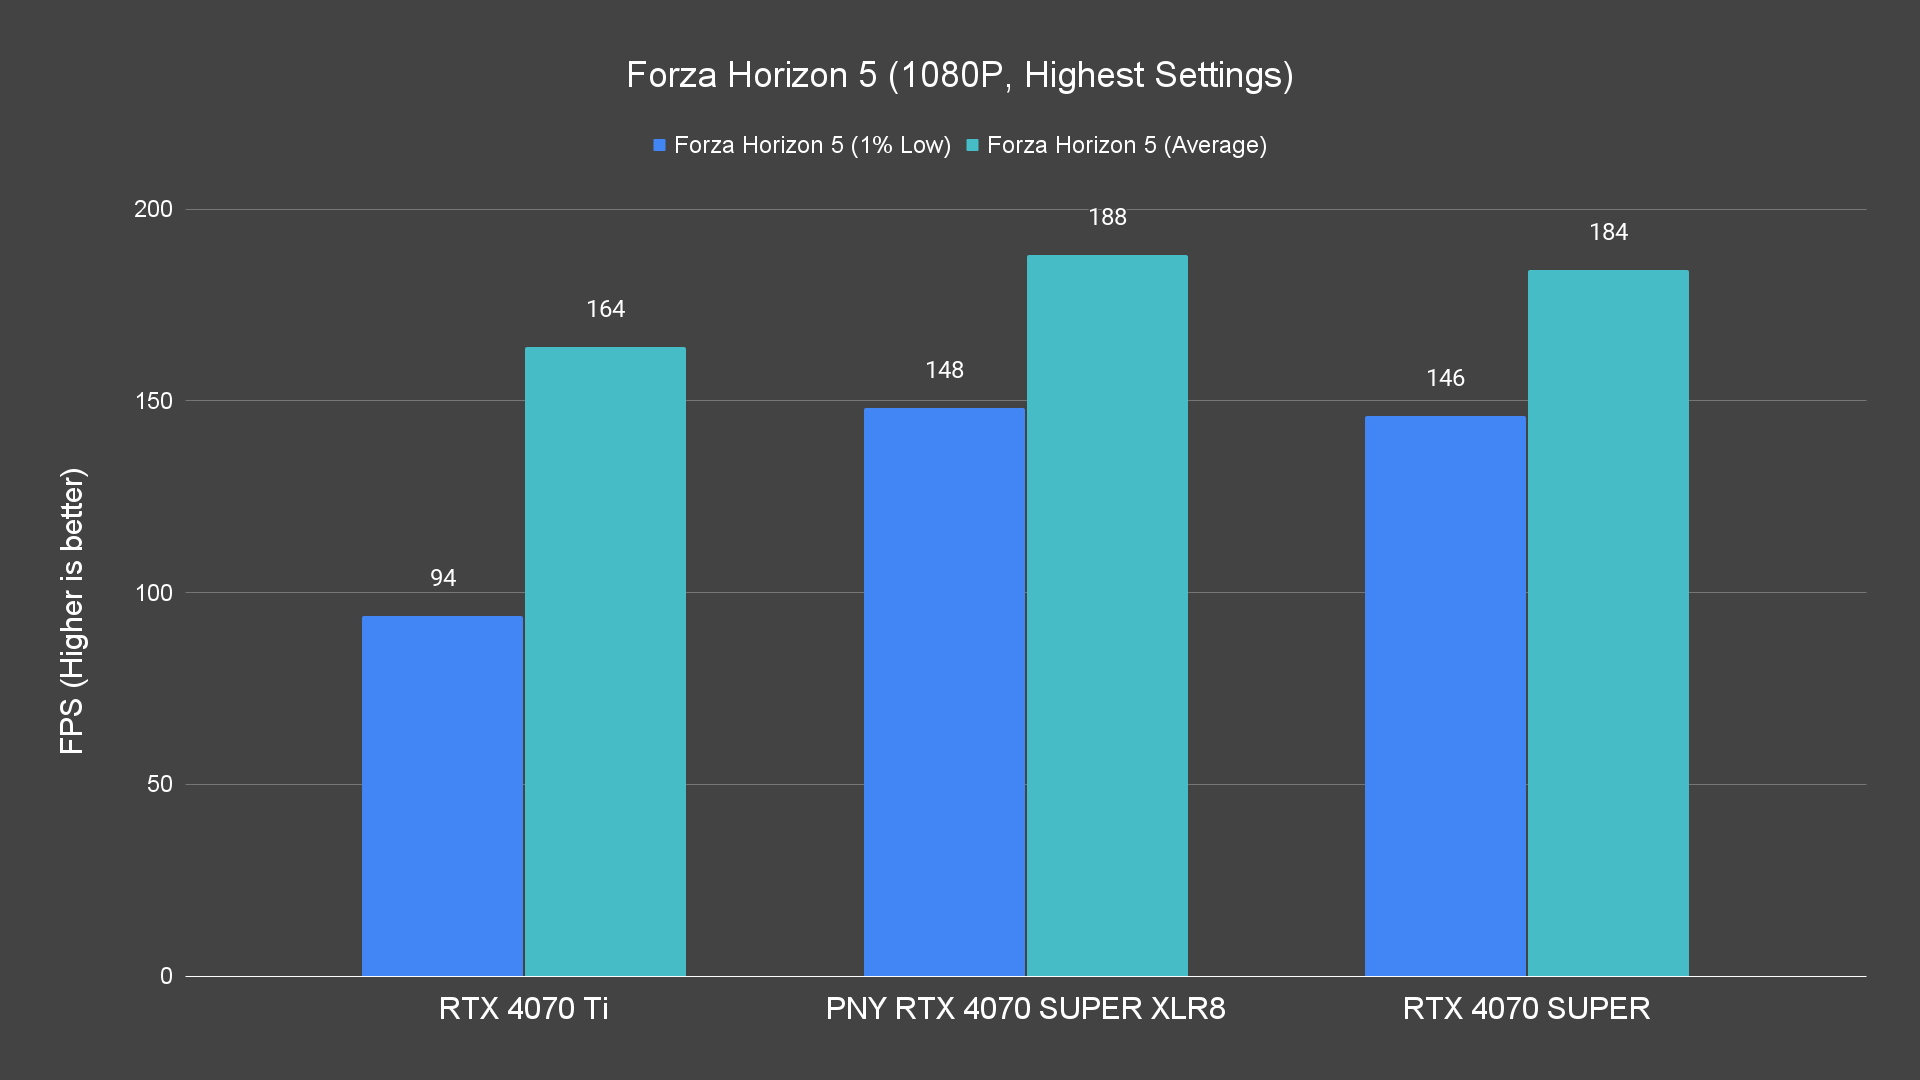 Forza Horizon 5 (1080P, Highest Settings) Raster PNY RTX 4070 SUPER XLR8